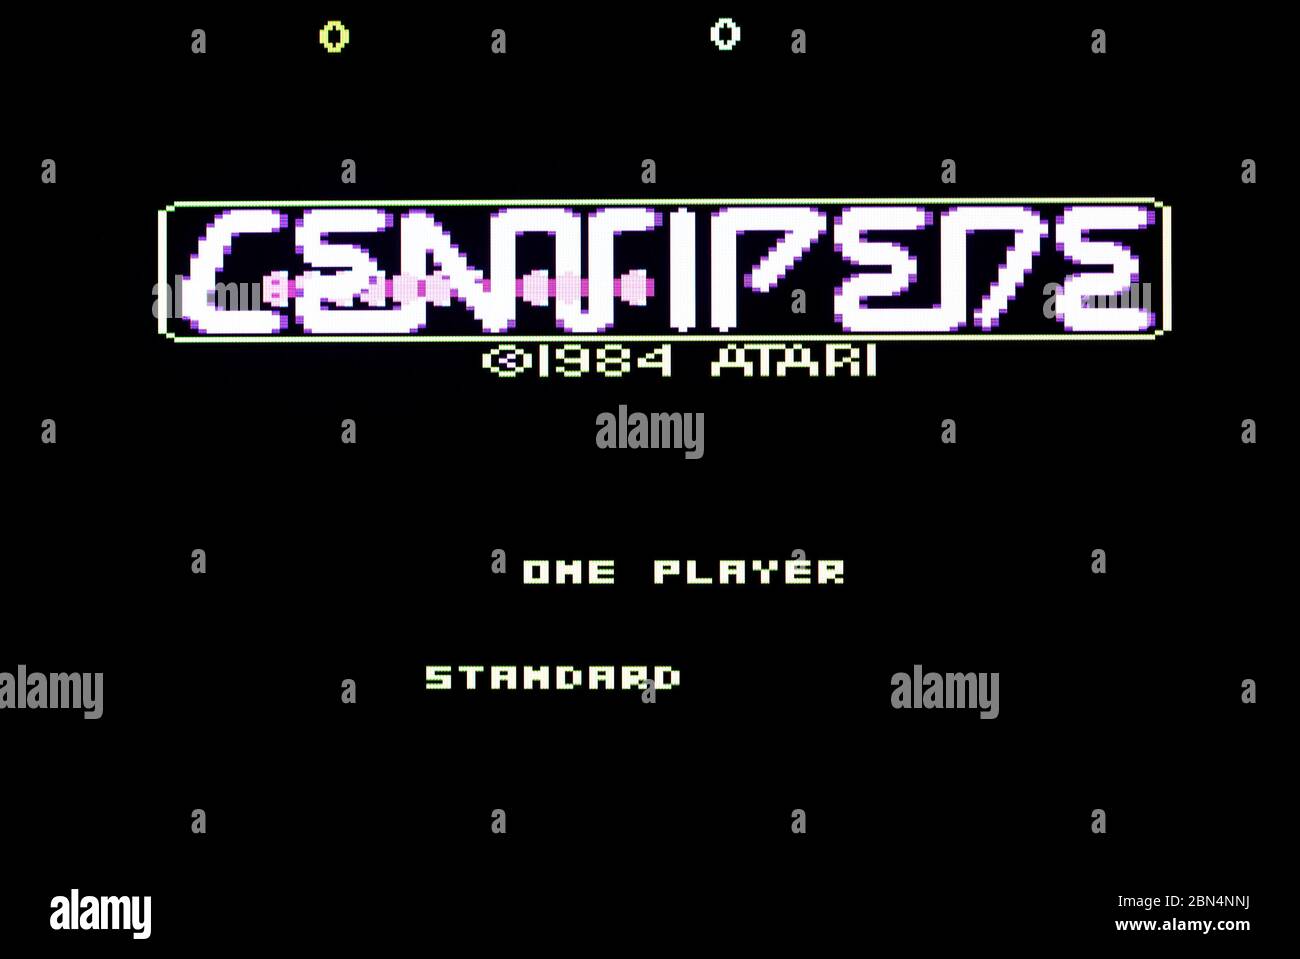 Centipede - Atari 7800 Videgame Stock Photo